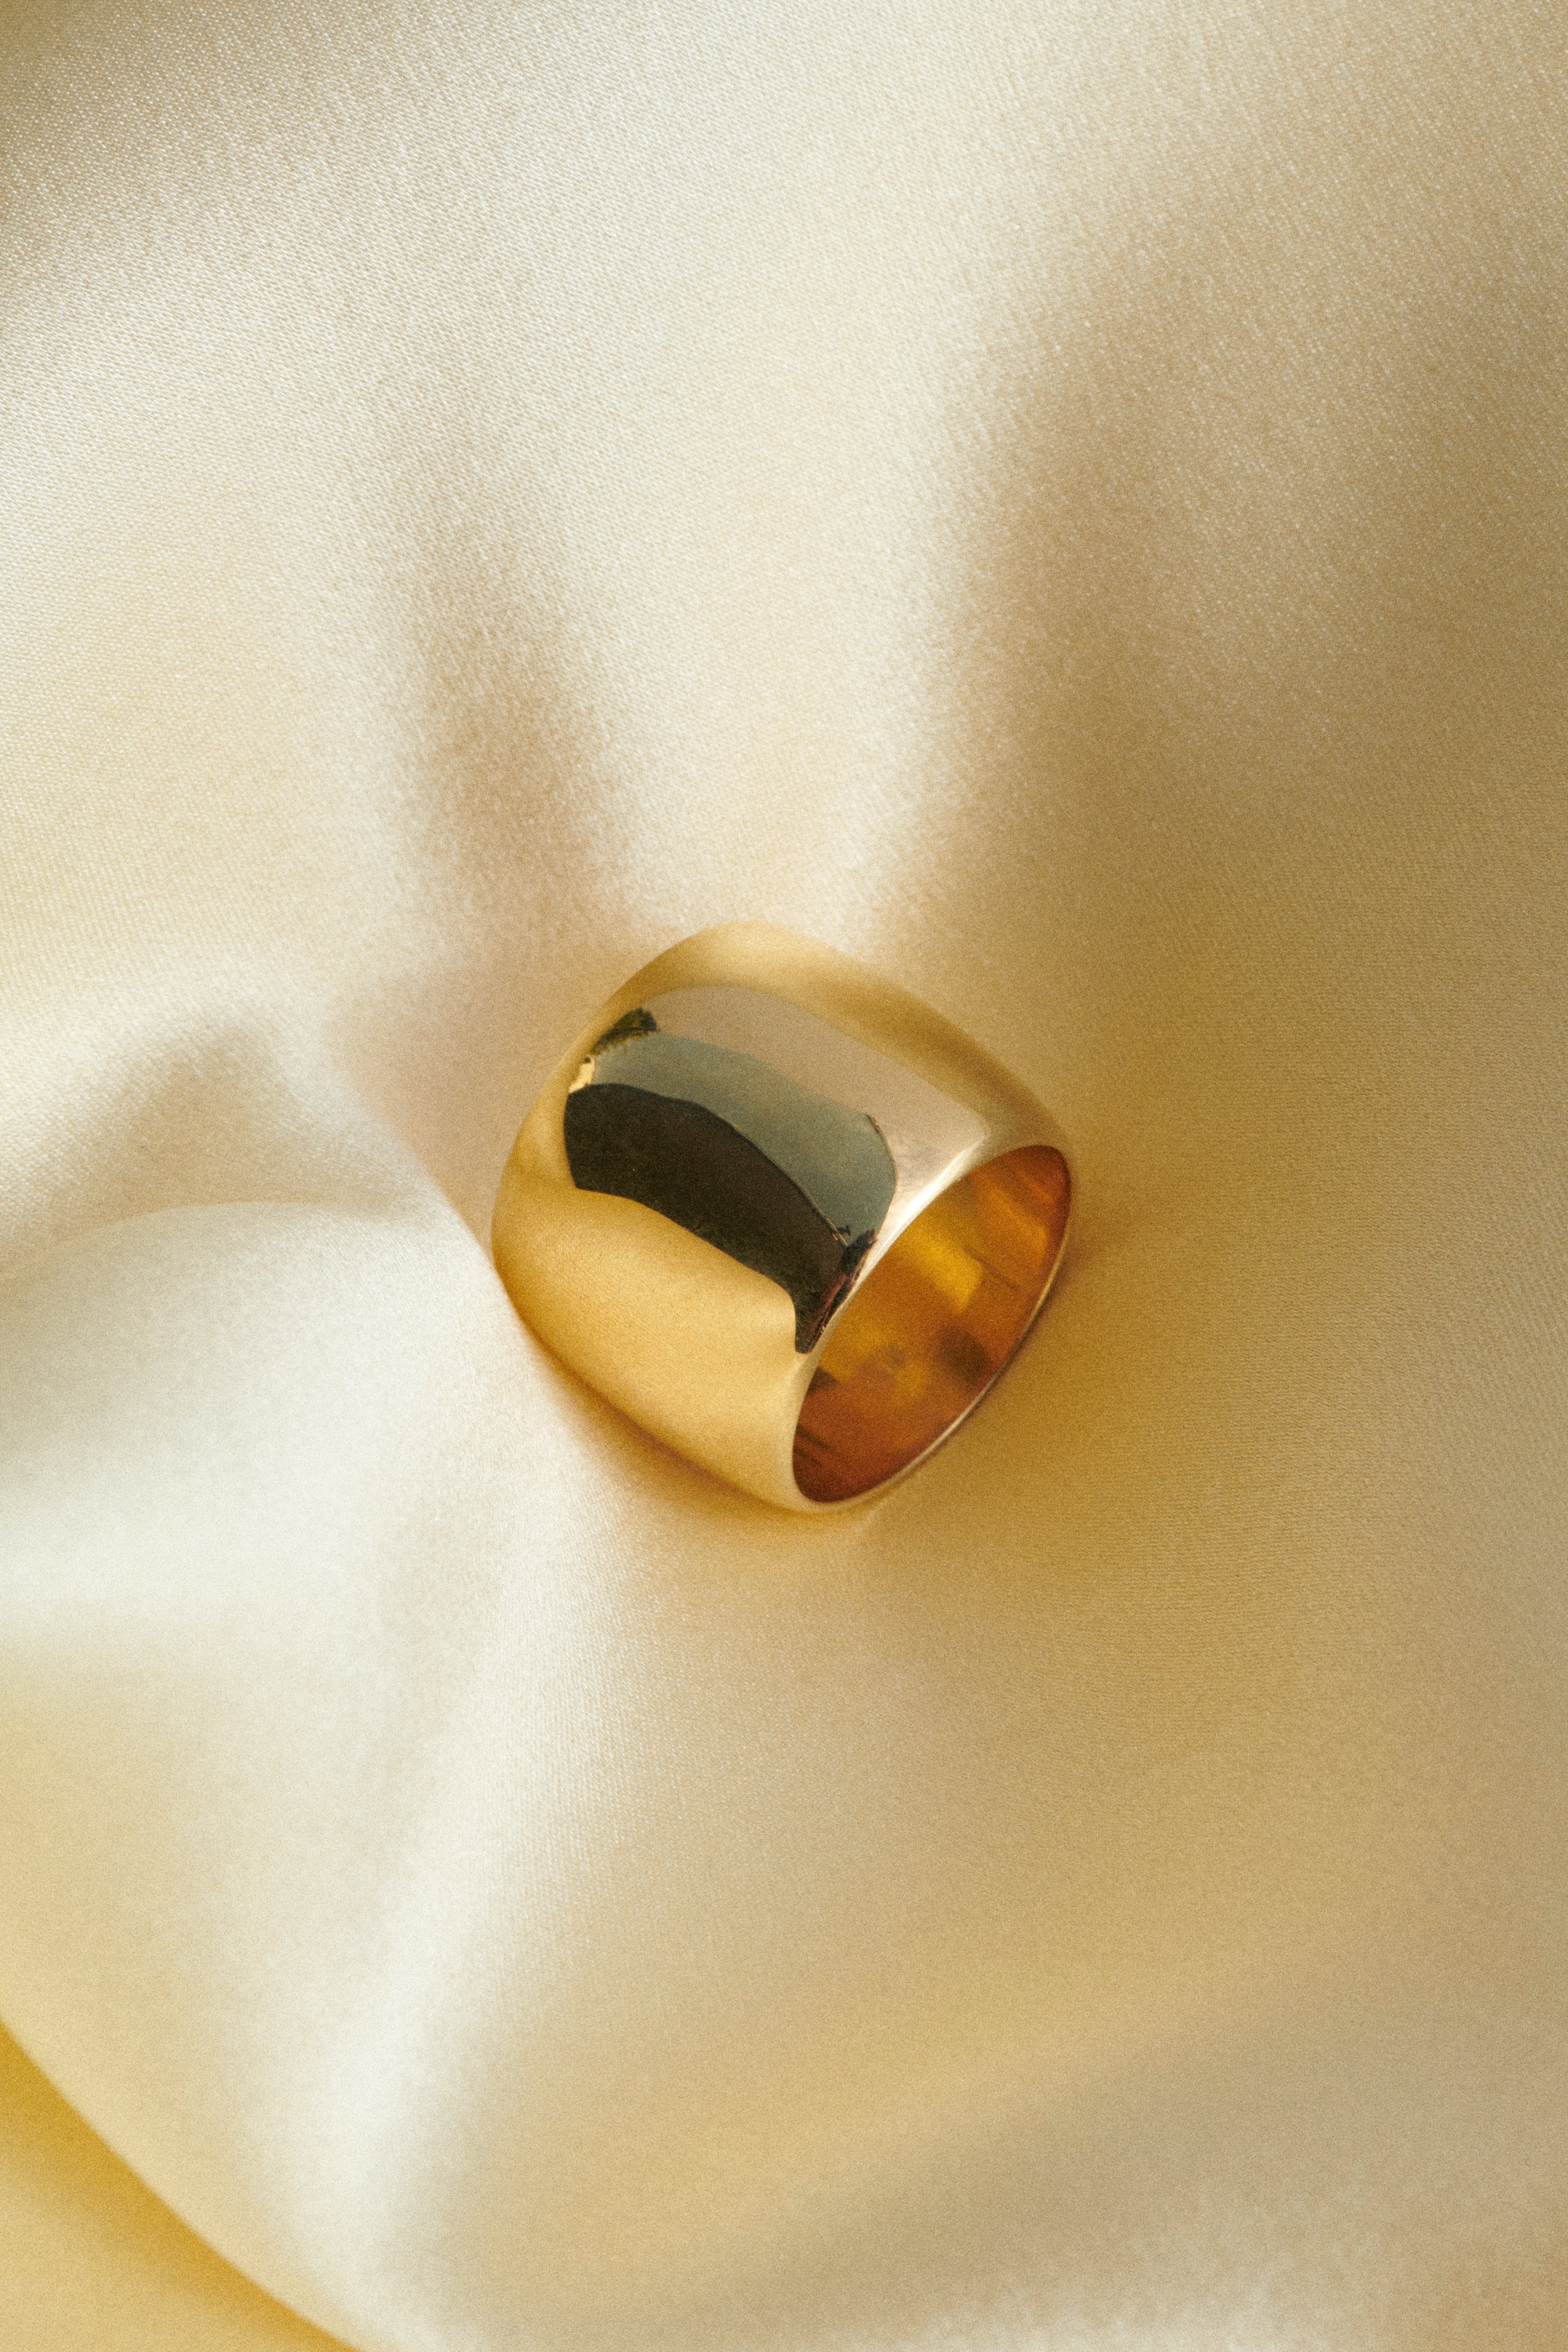 DY Classic Band Ring in 18K Yellow Gold, 6mm | David Yurman